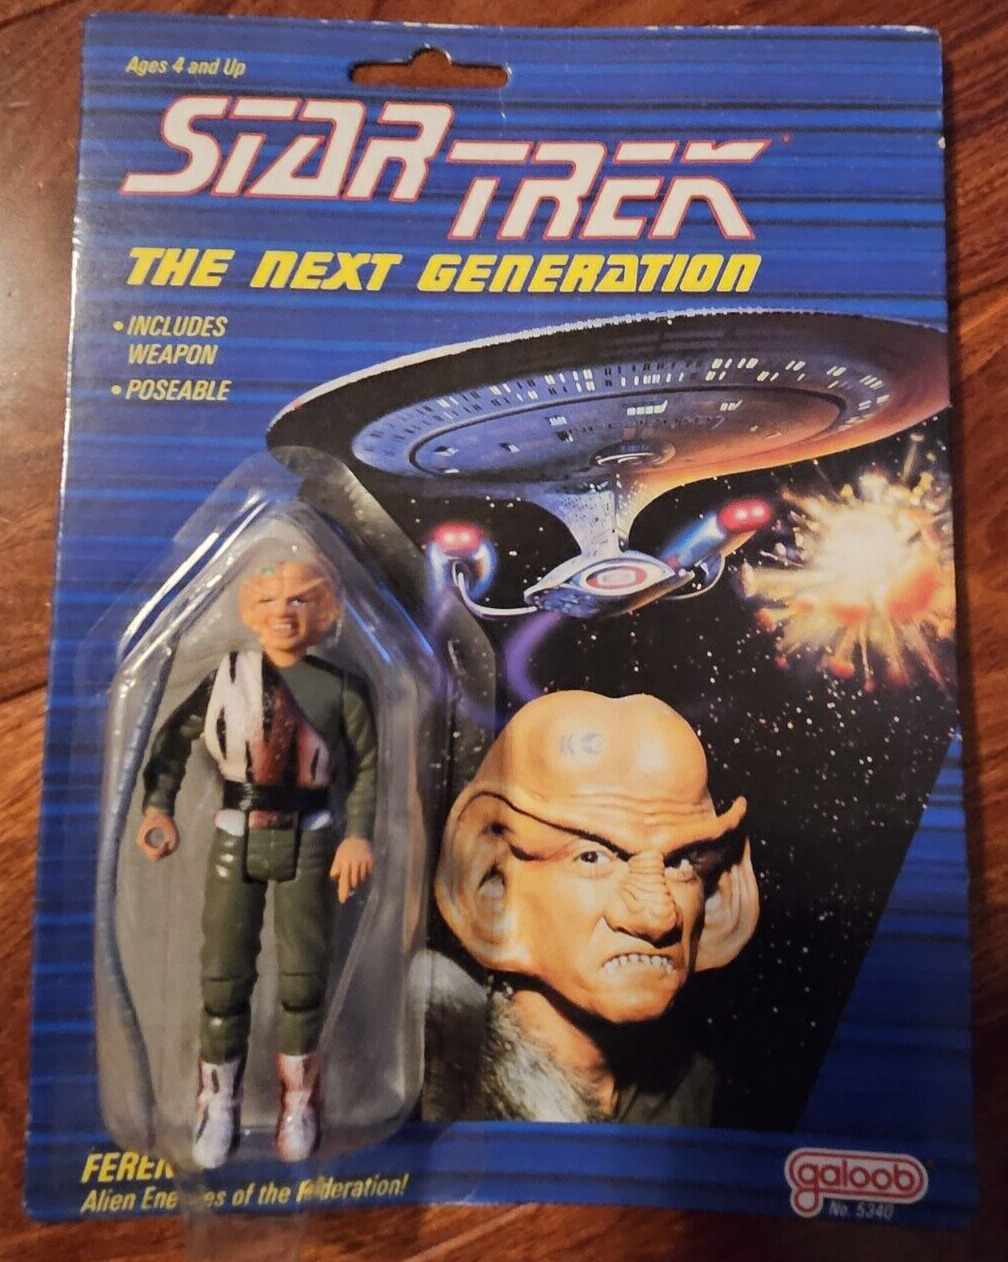 Ferengi Alien Enemy Galoob Action Figure Star Trek Next Generation 1988